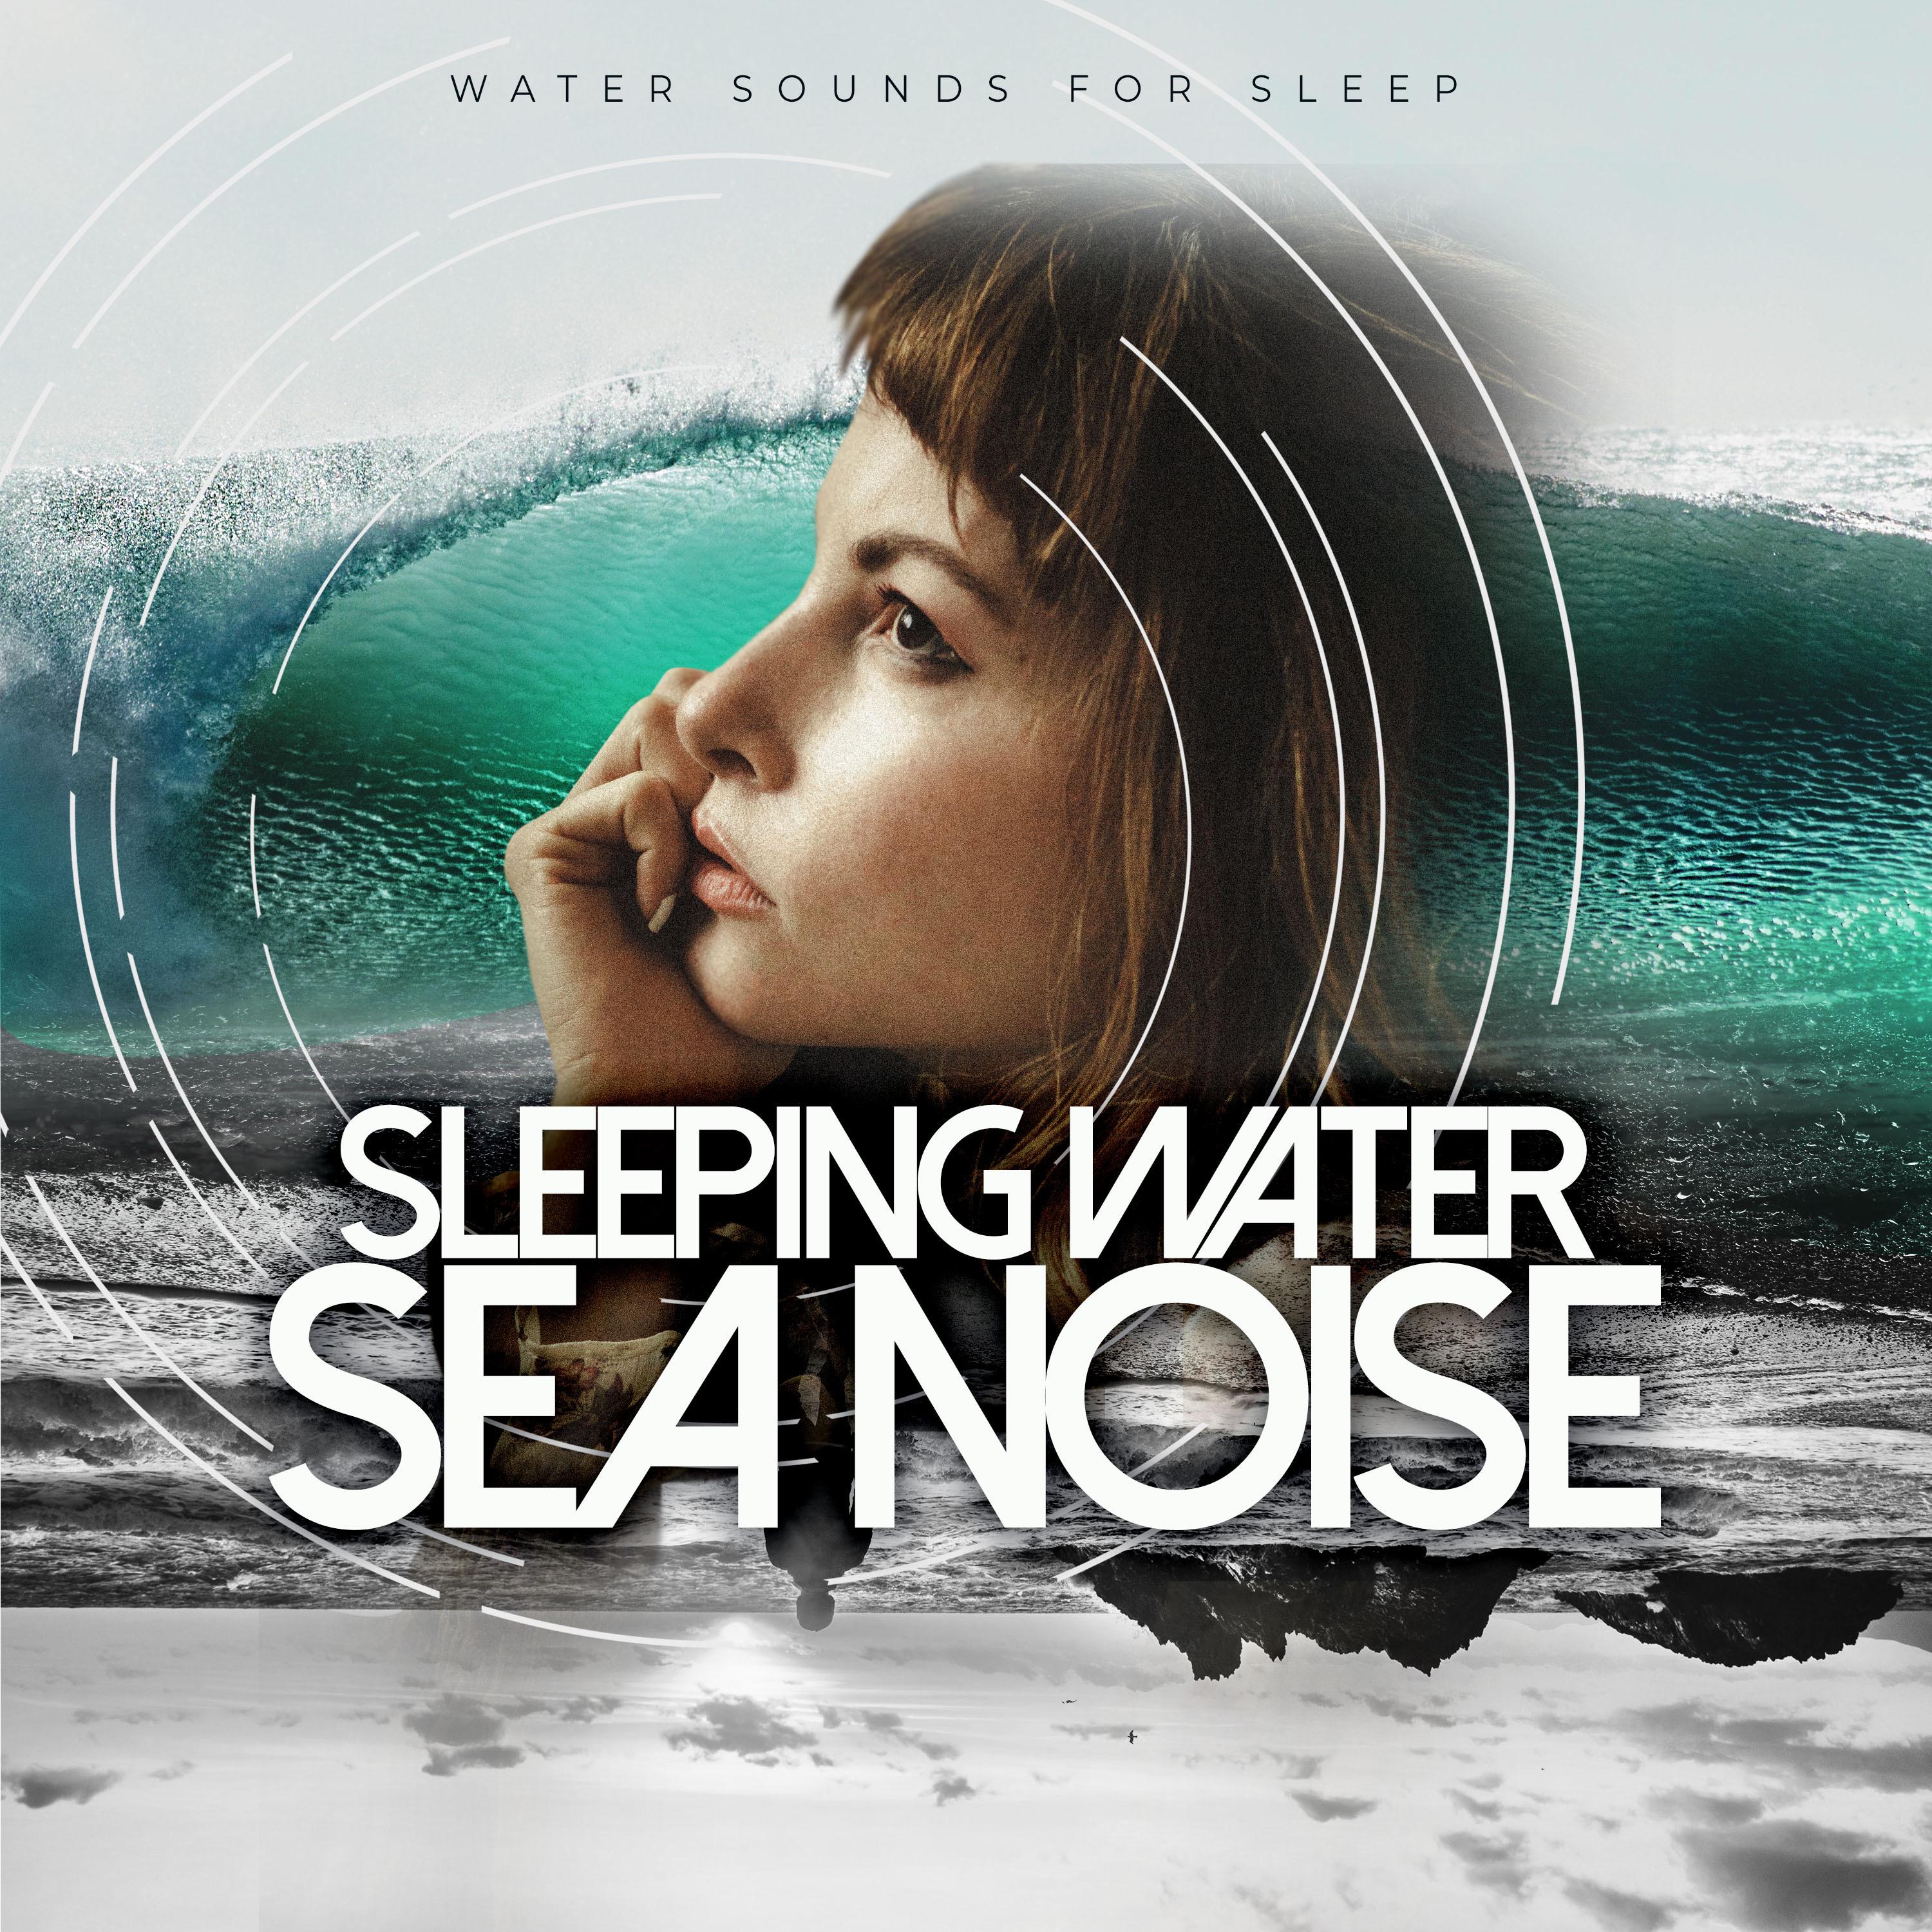 Sleeping Water Sea Noise